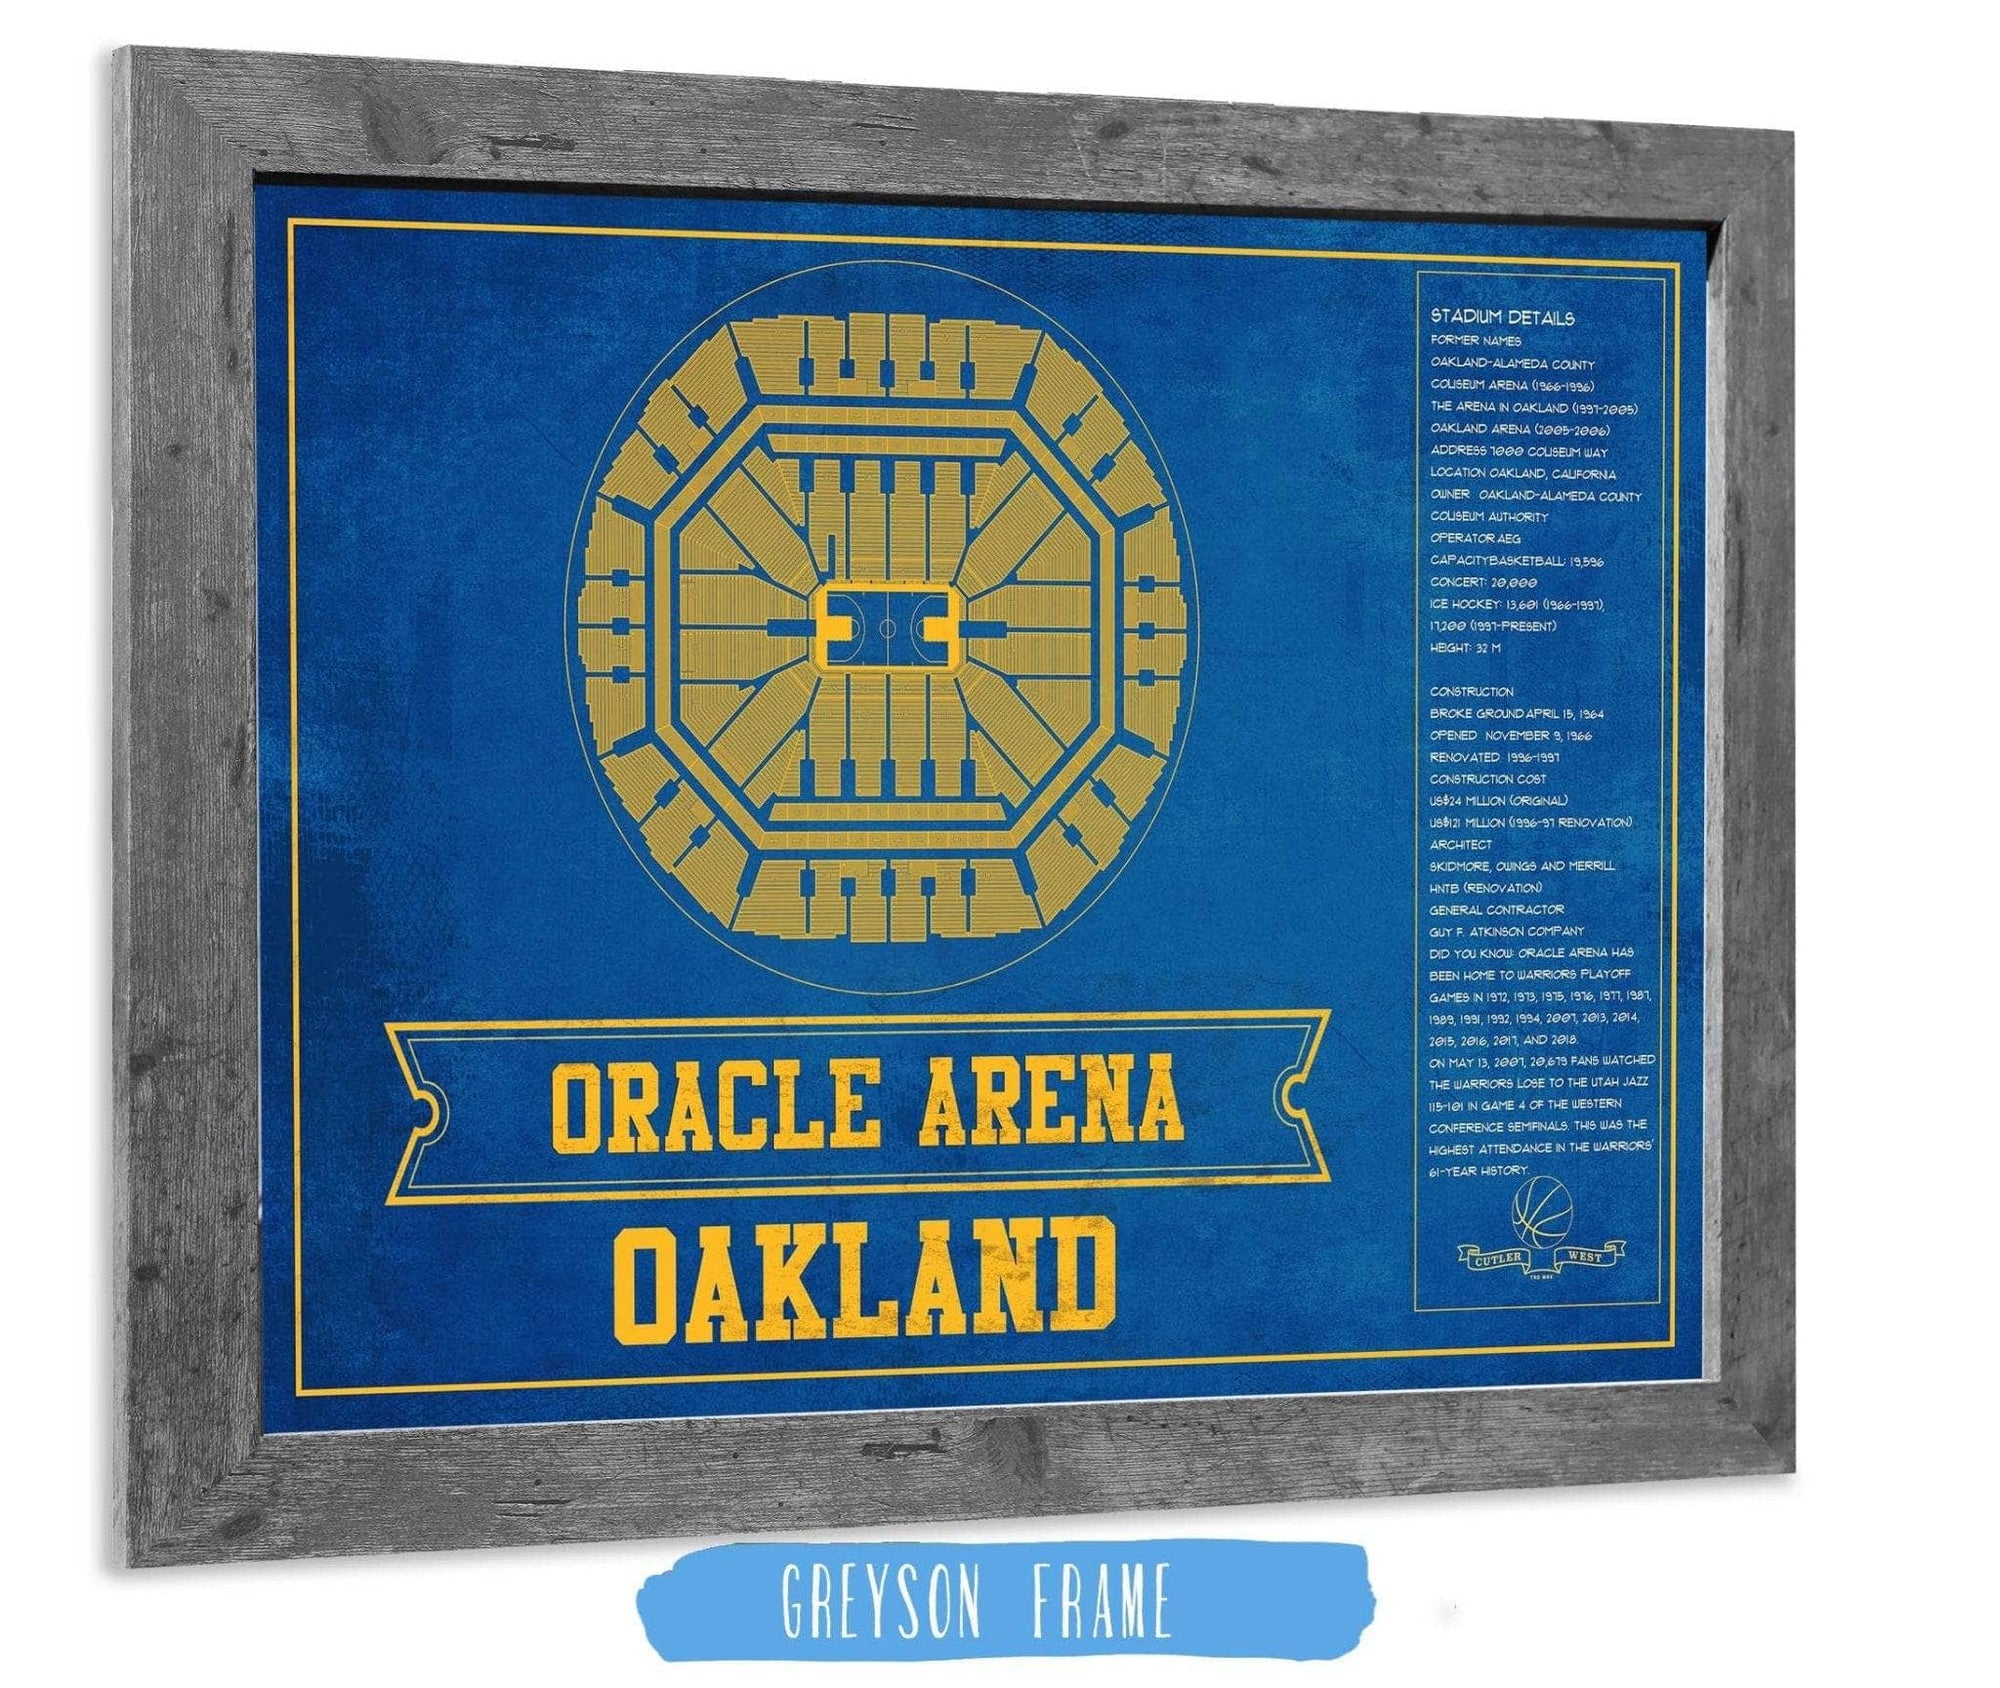 Cutler West Basketball Collection 14" x 11" / Greyson Frame Golden State Warriors - Oracle Arena Vintage Basketball Blueprint Framed NBA Team Color Print 660987526-TEAM_76372